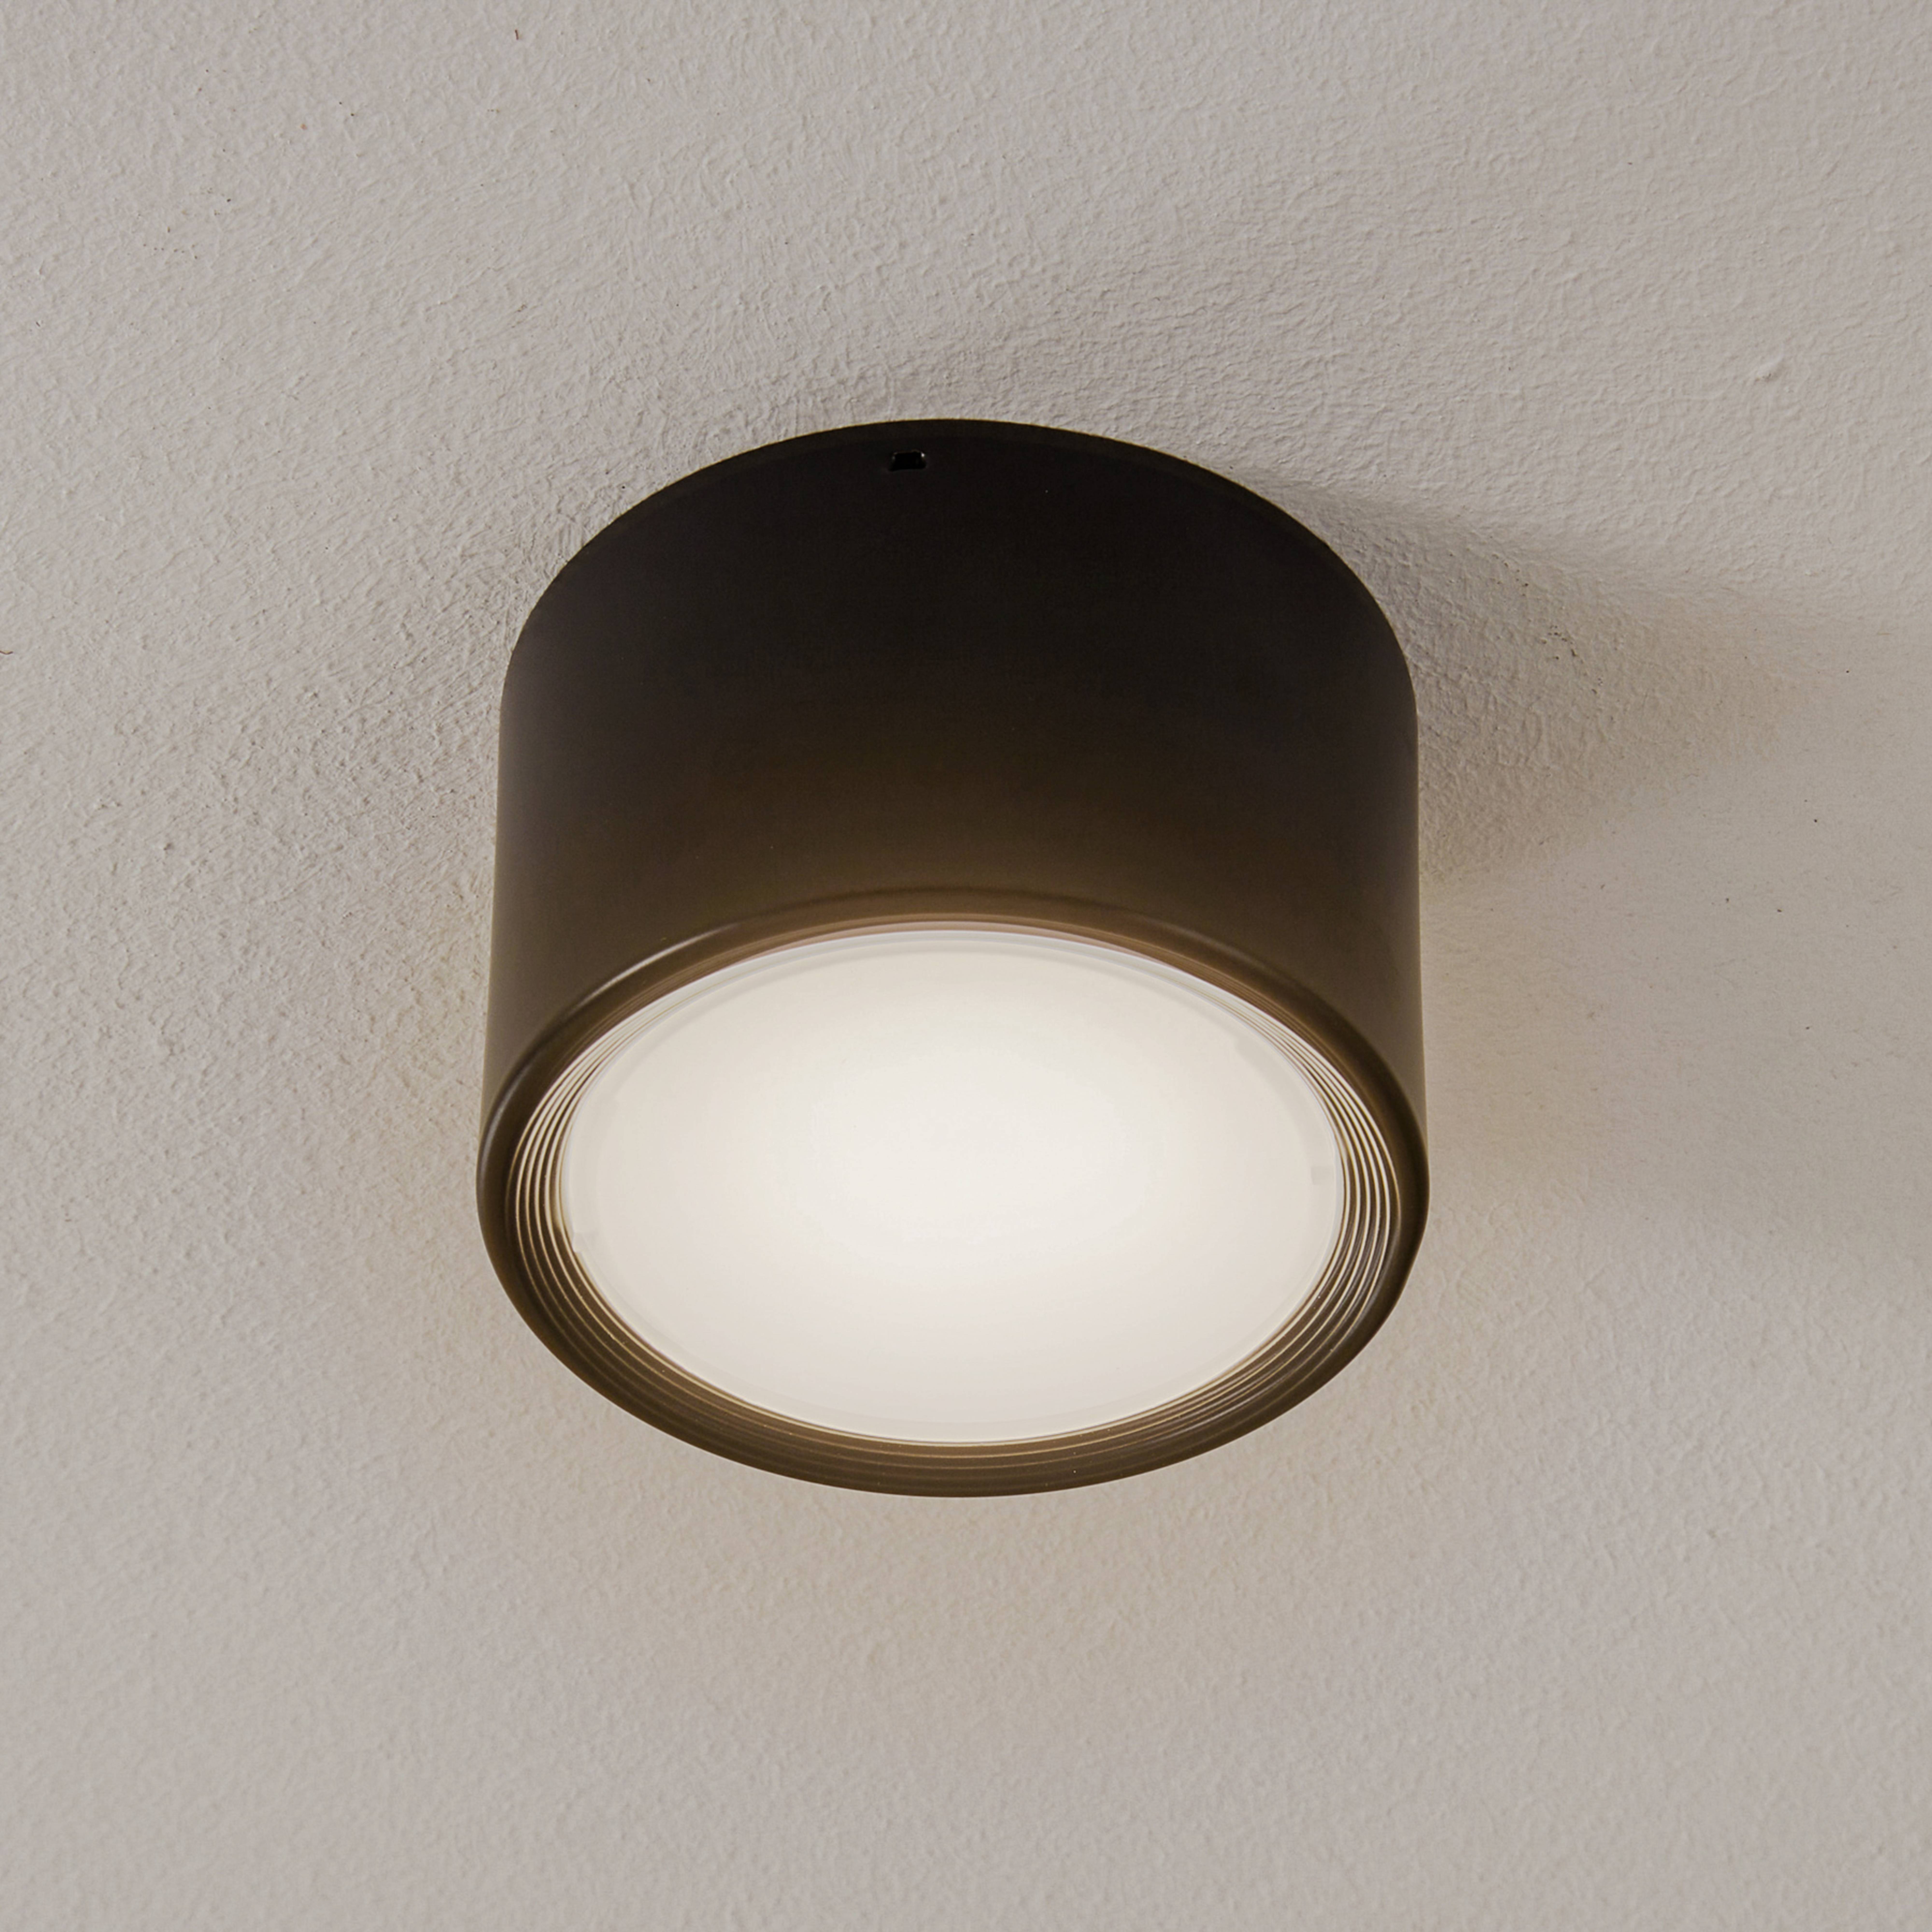 LED-Downlight Ita in Schwarz mit Diffusor, Ø 12 cm